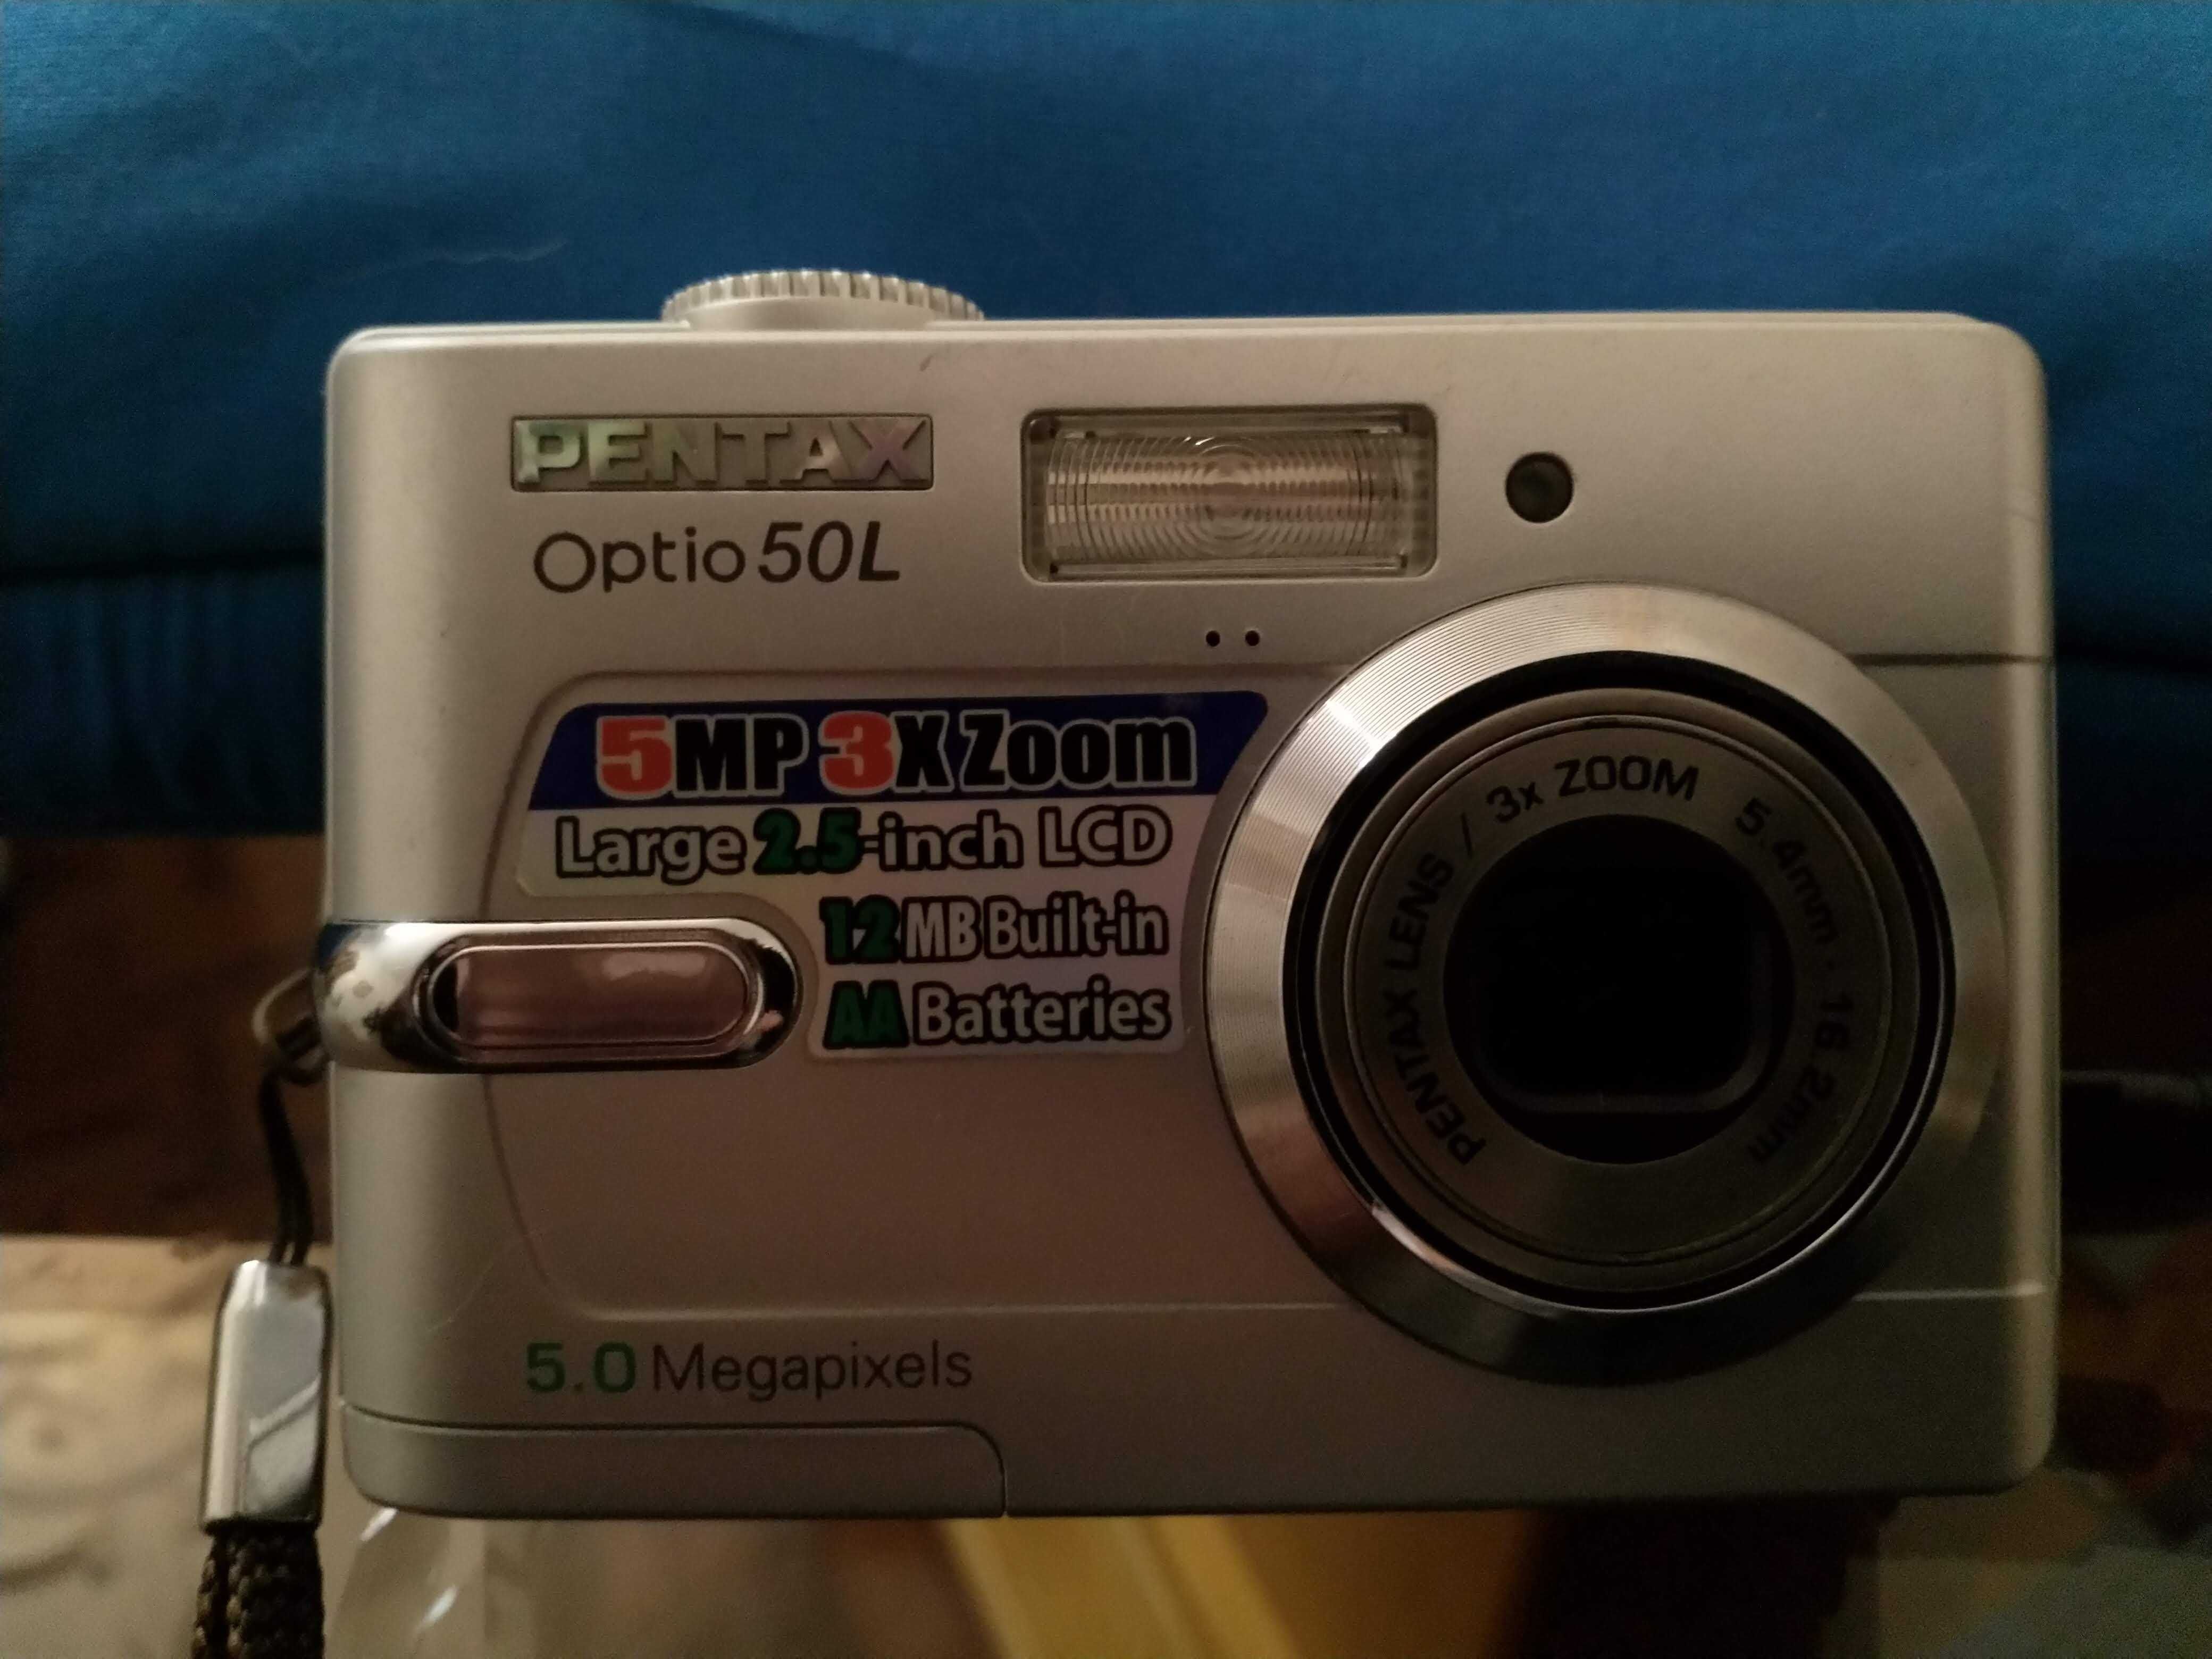 Pentax Optio 50L 5.0MP Digital Camera - Silver